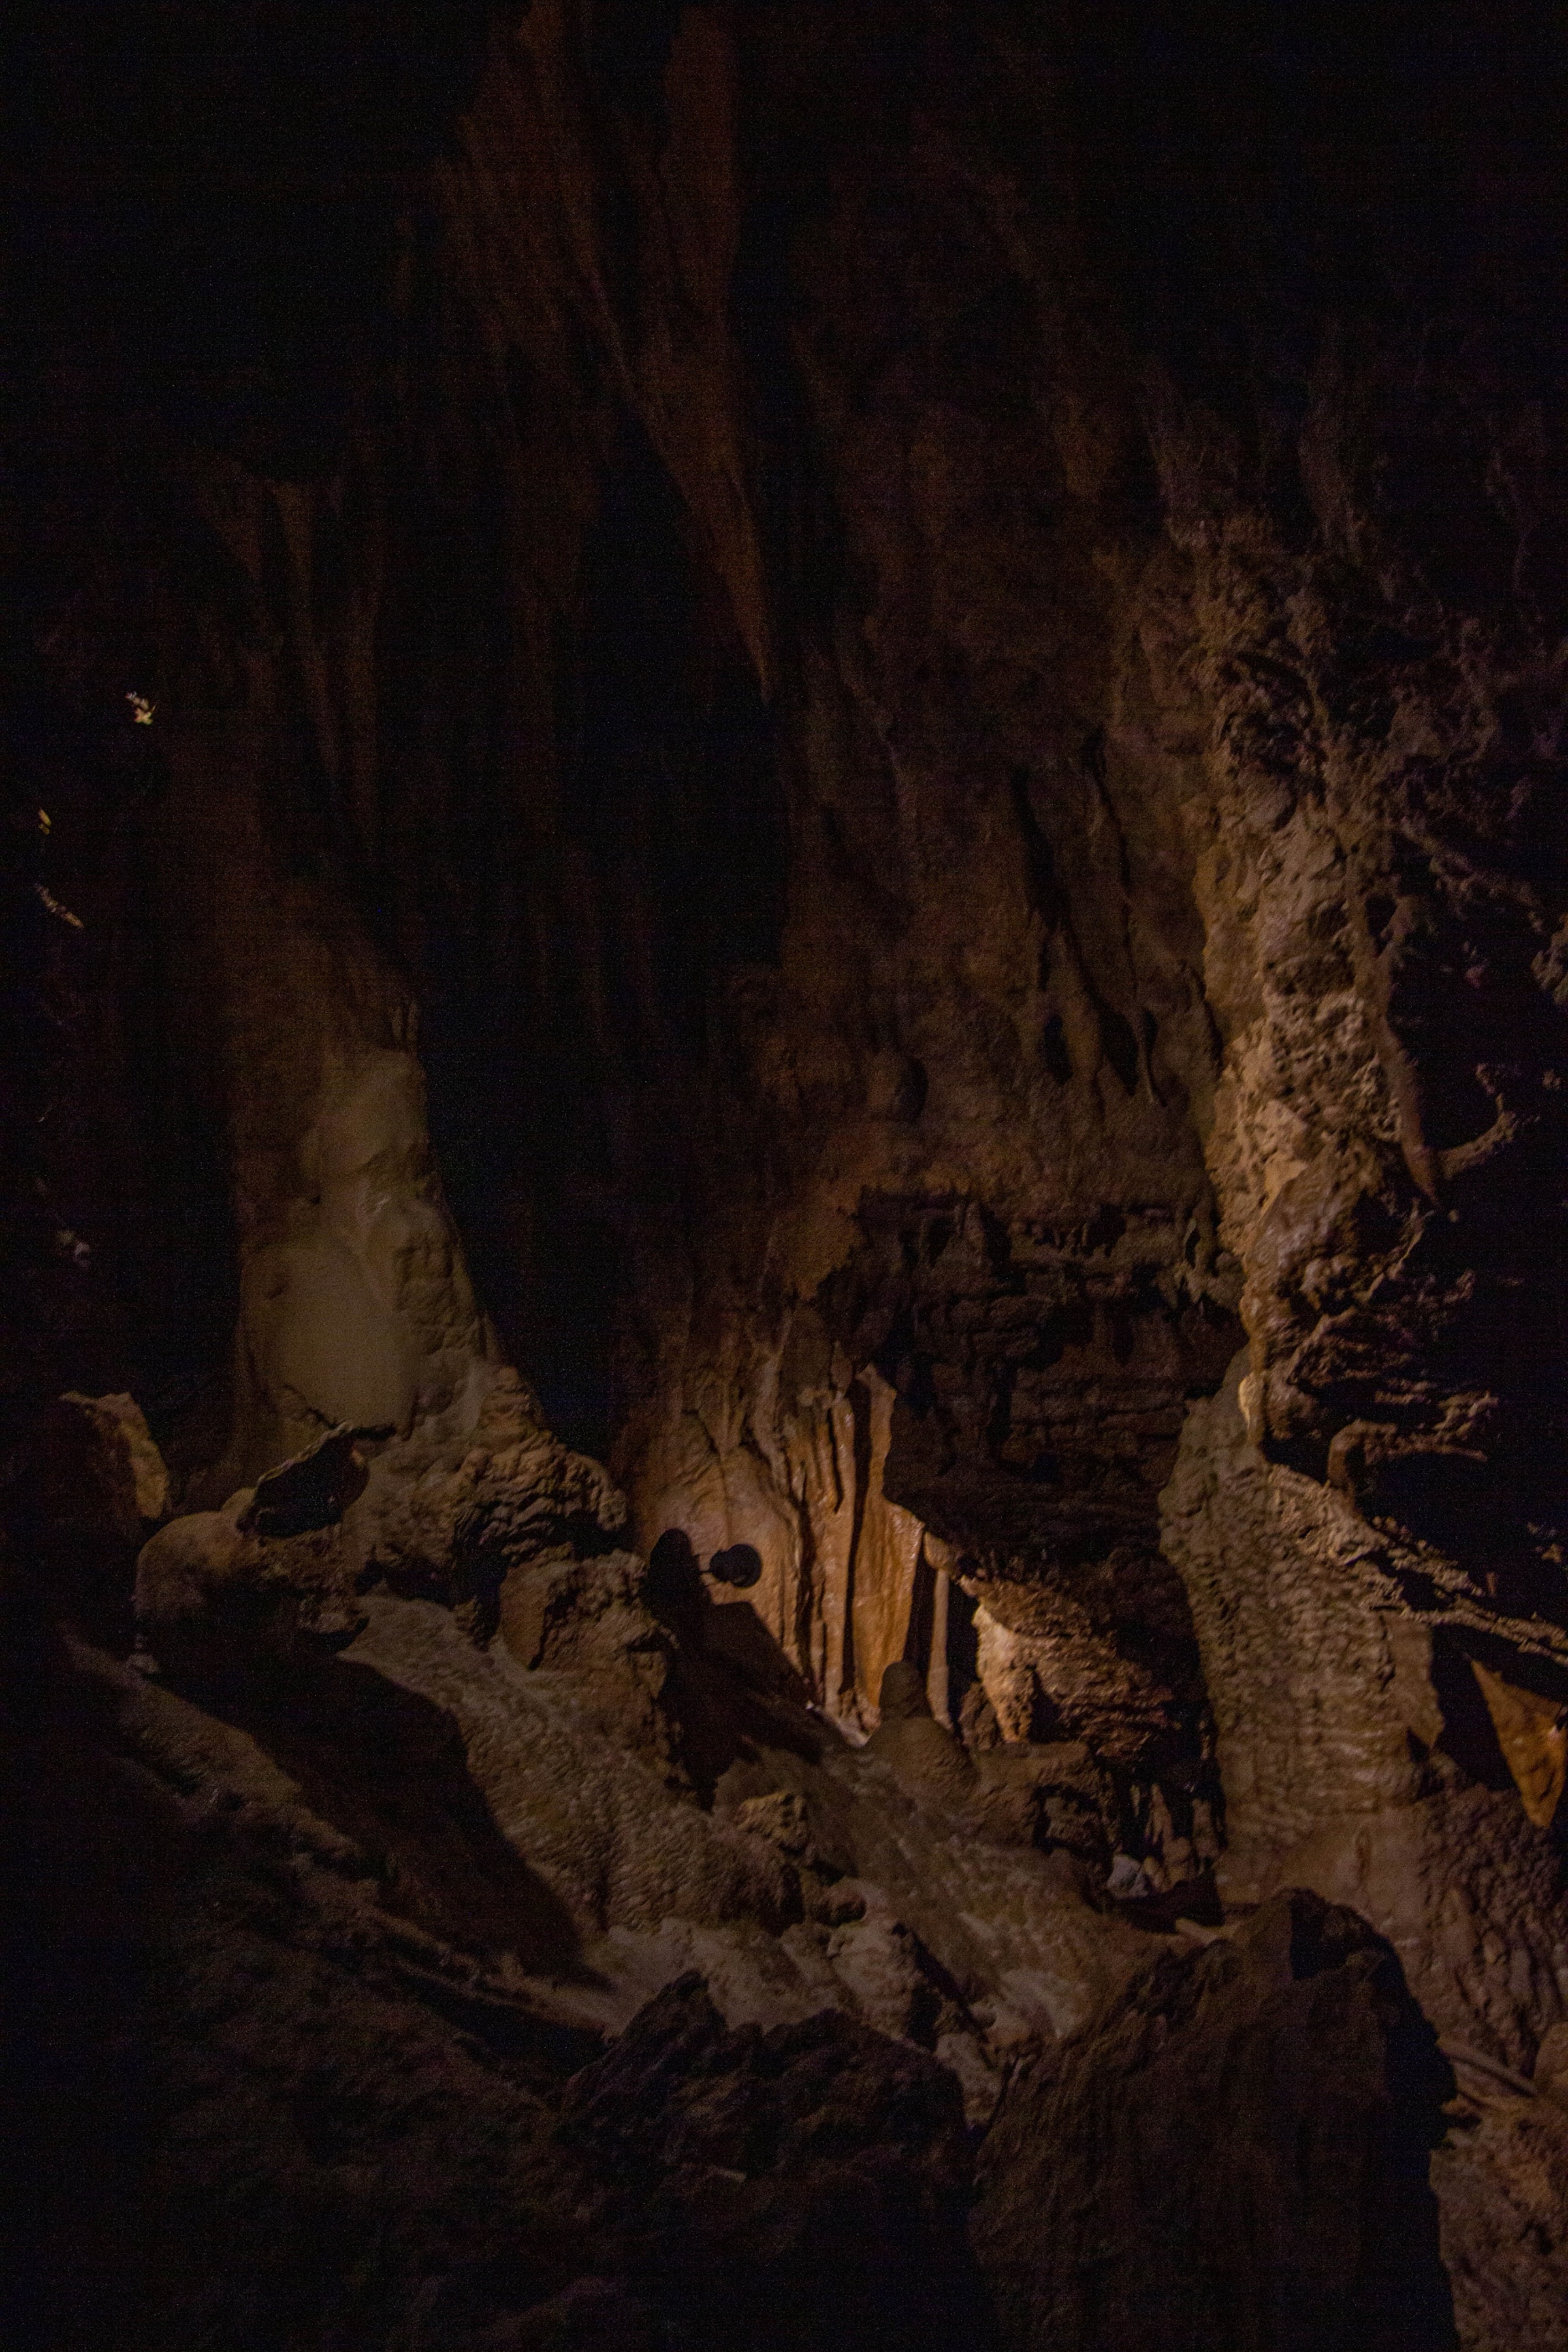 Caves in Equi Terme